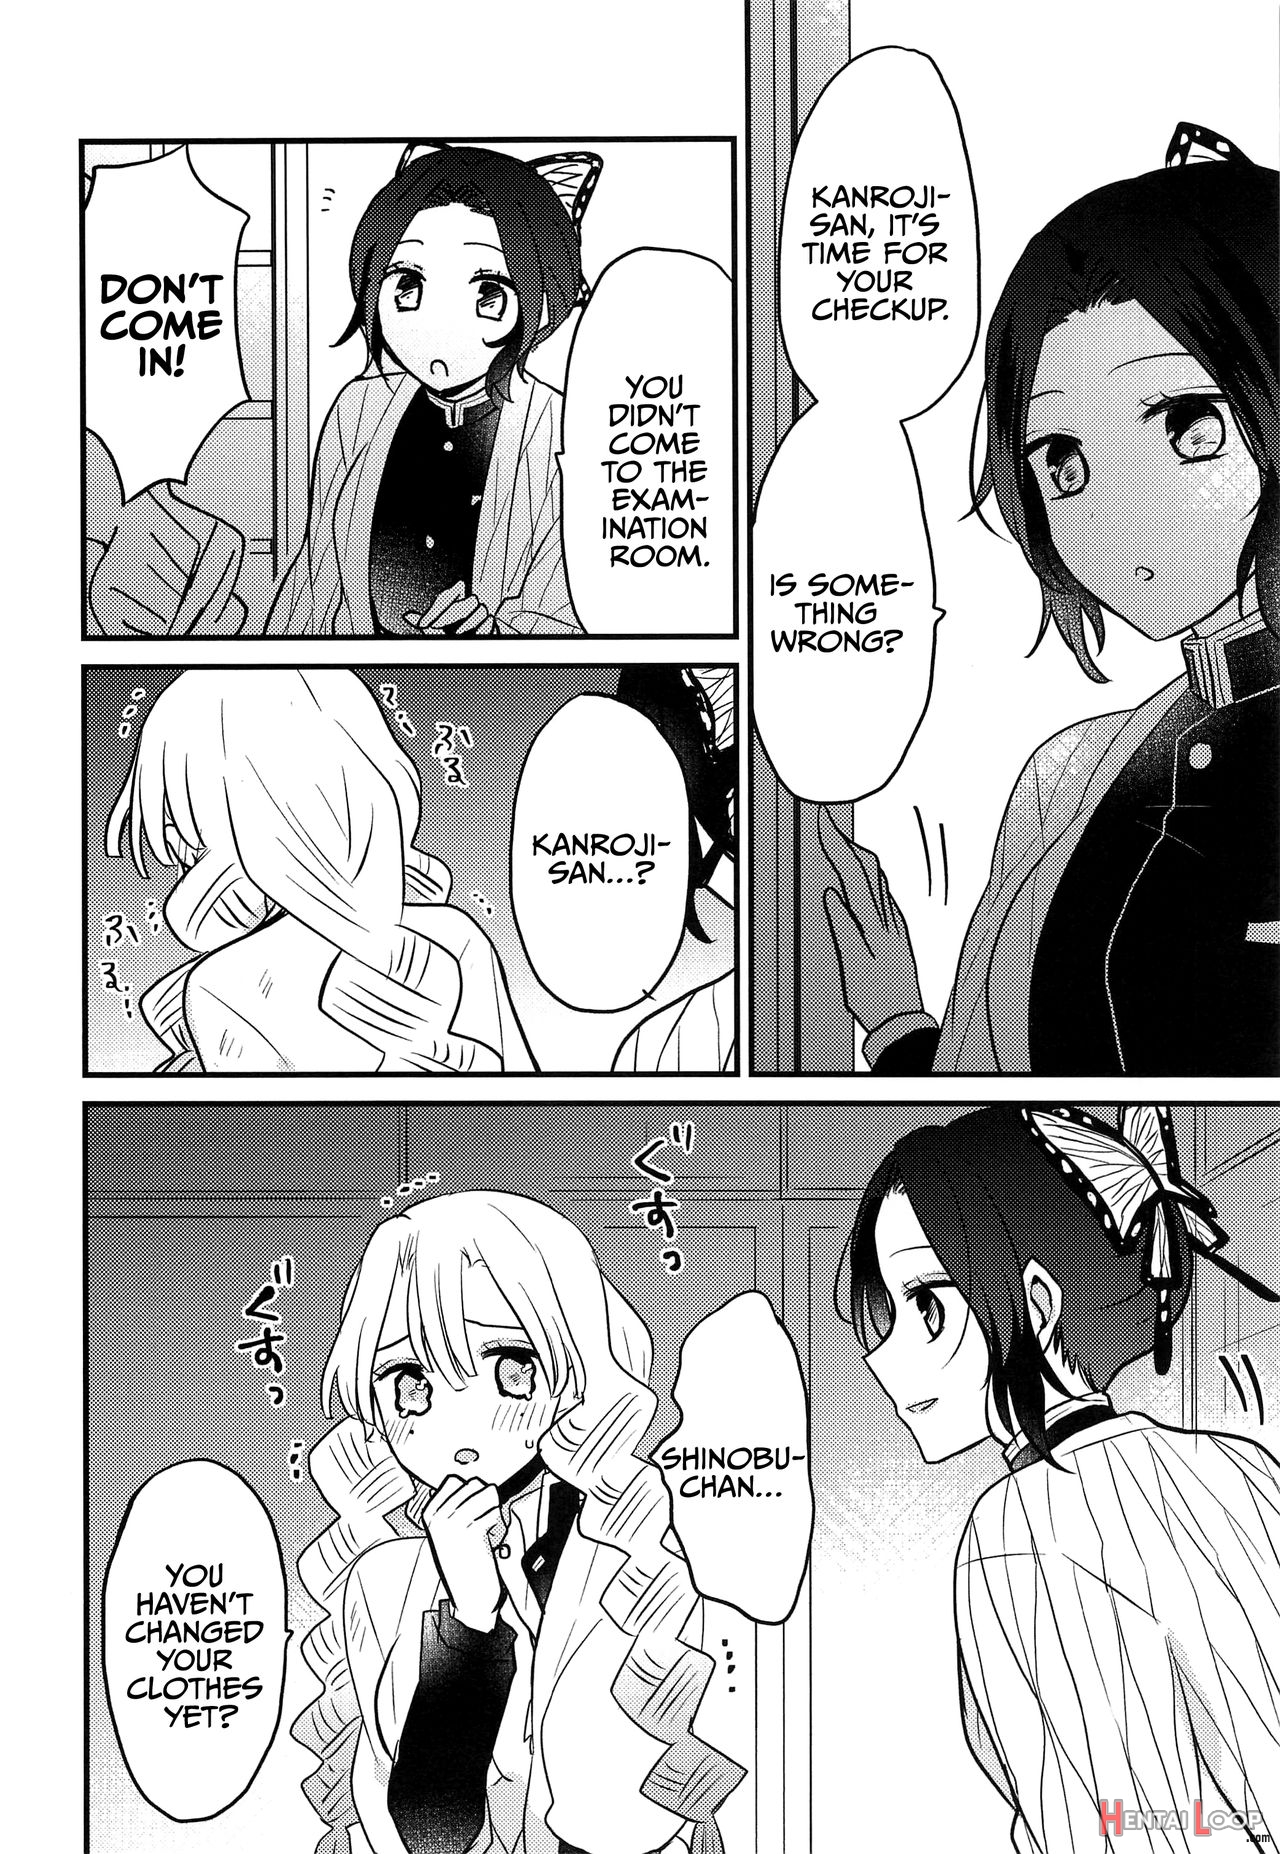 Mitsuri-chan's Futanari Incident page 5